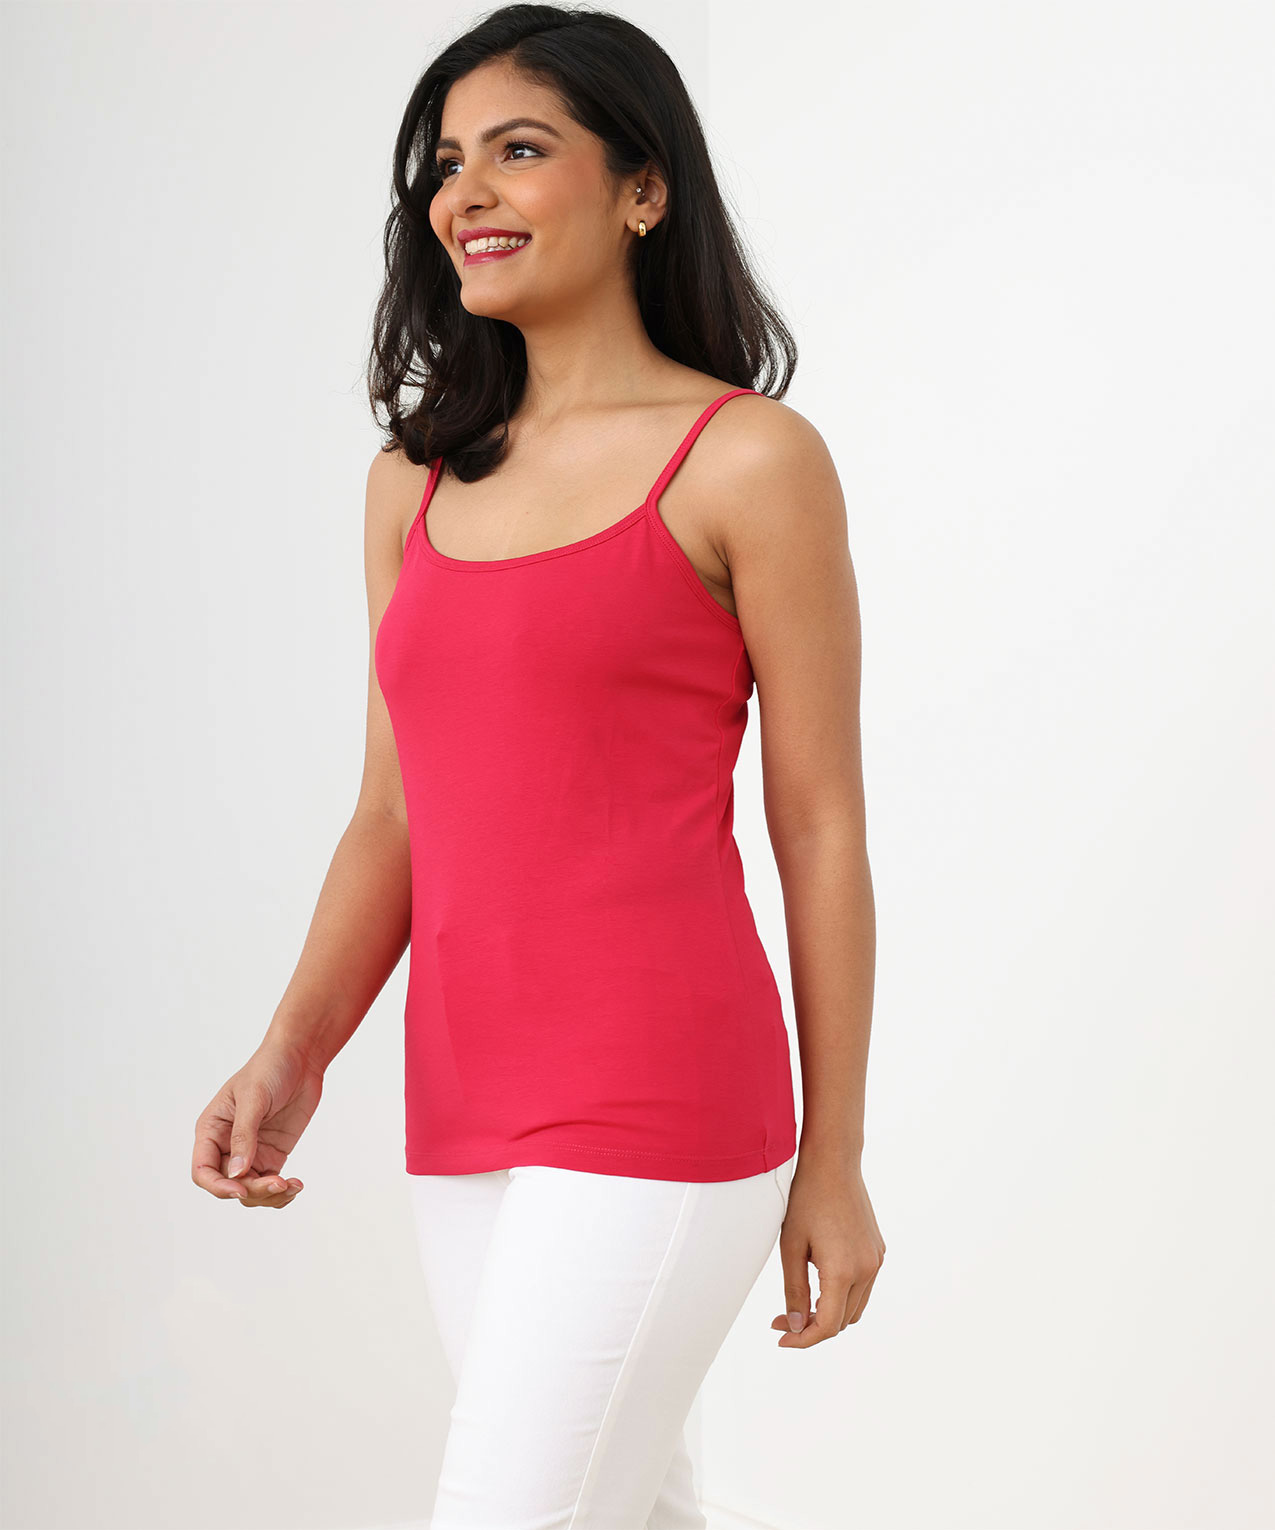 Orrpally Women Cotton Camisole Shelf Bra Cami Tank Tops Adjustable